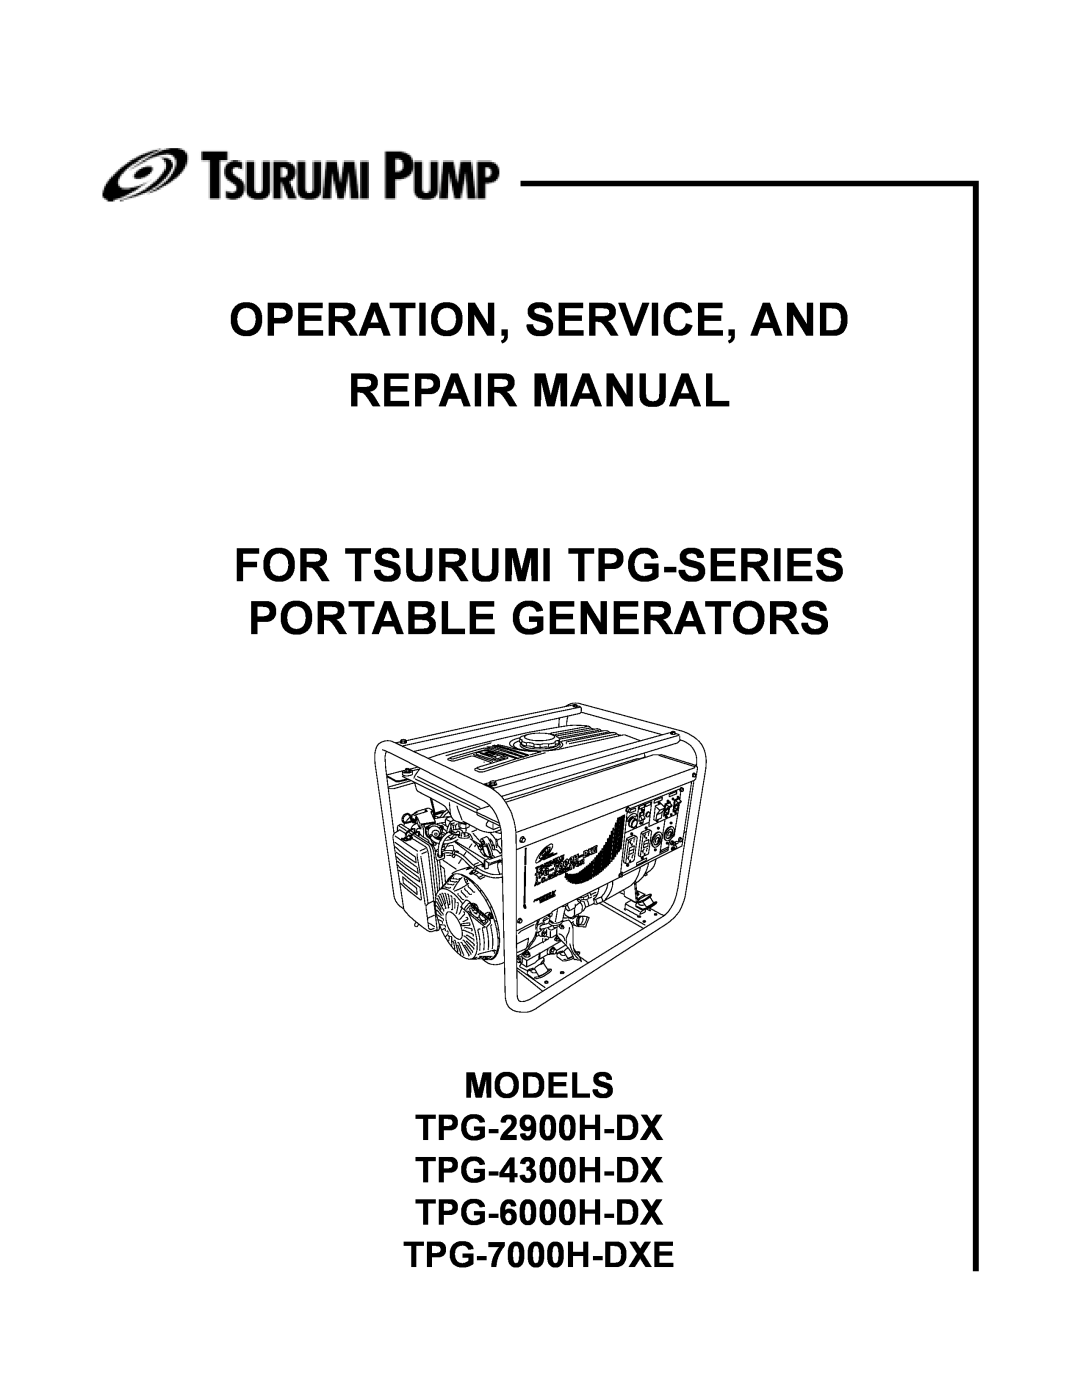 Honda Power Equipment TPG-7000H-DXE manual Operation, Service, And, Repair Manual, For Tsurumi Tpg-Series, Models 